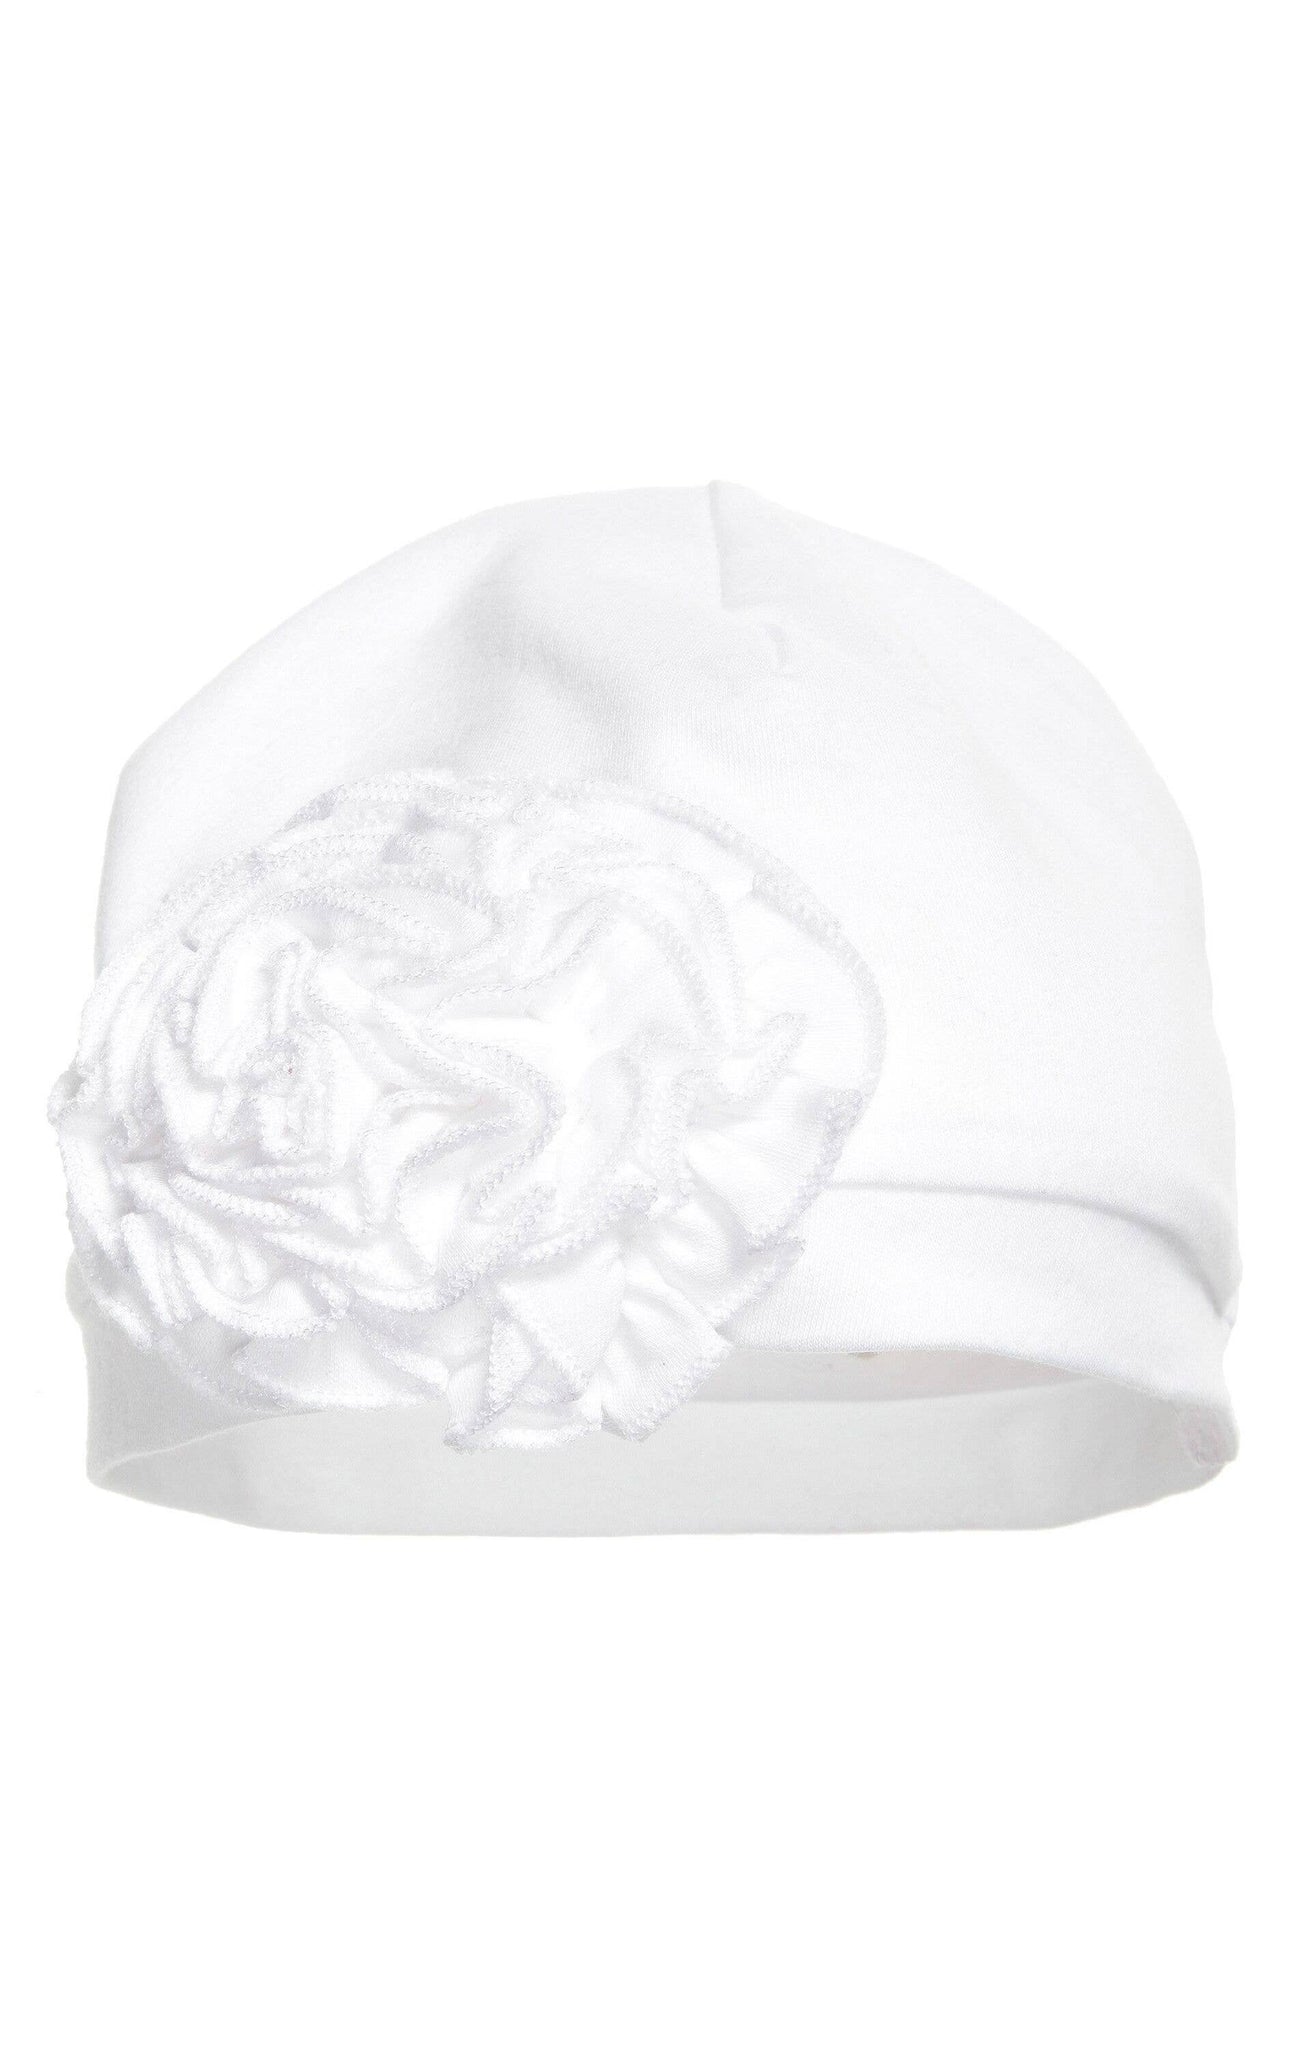 LAYETTE BASIC-White Bijou Hat